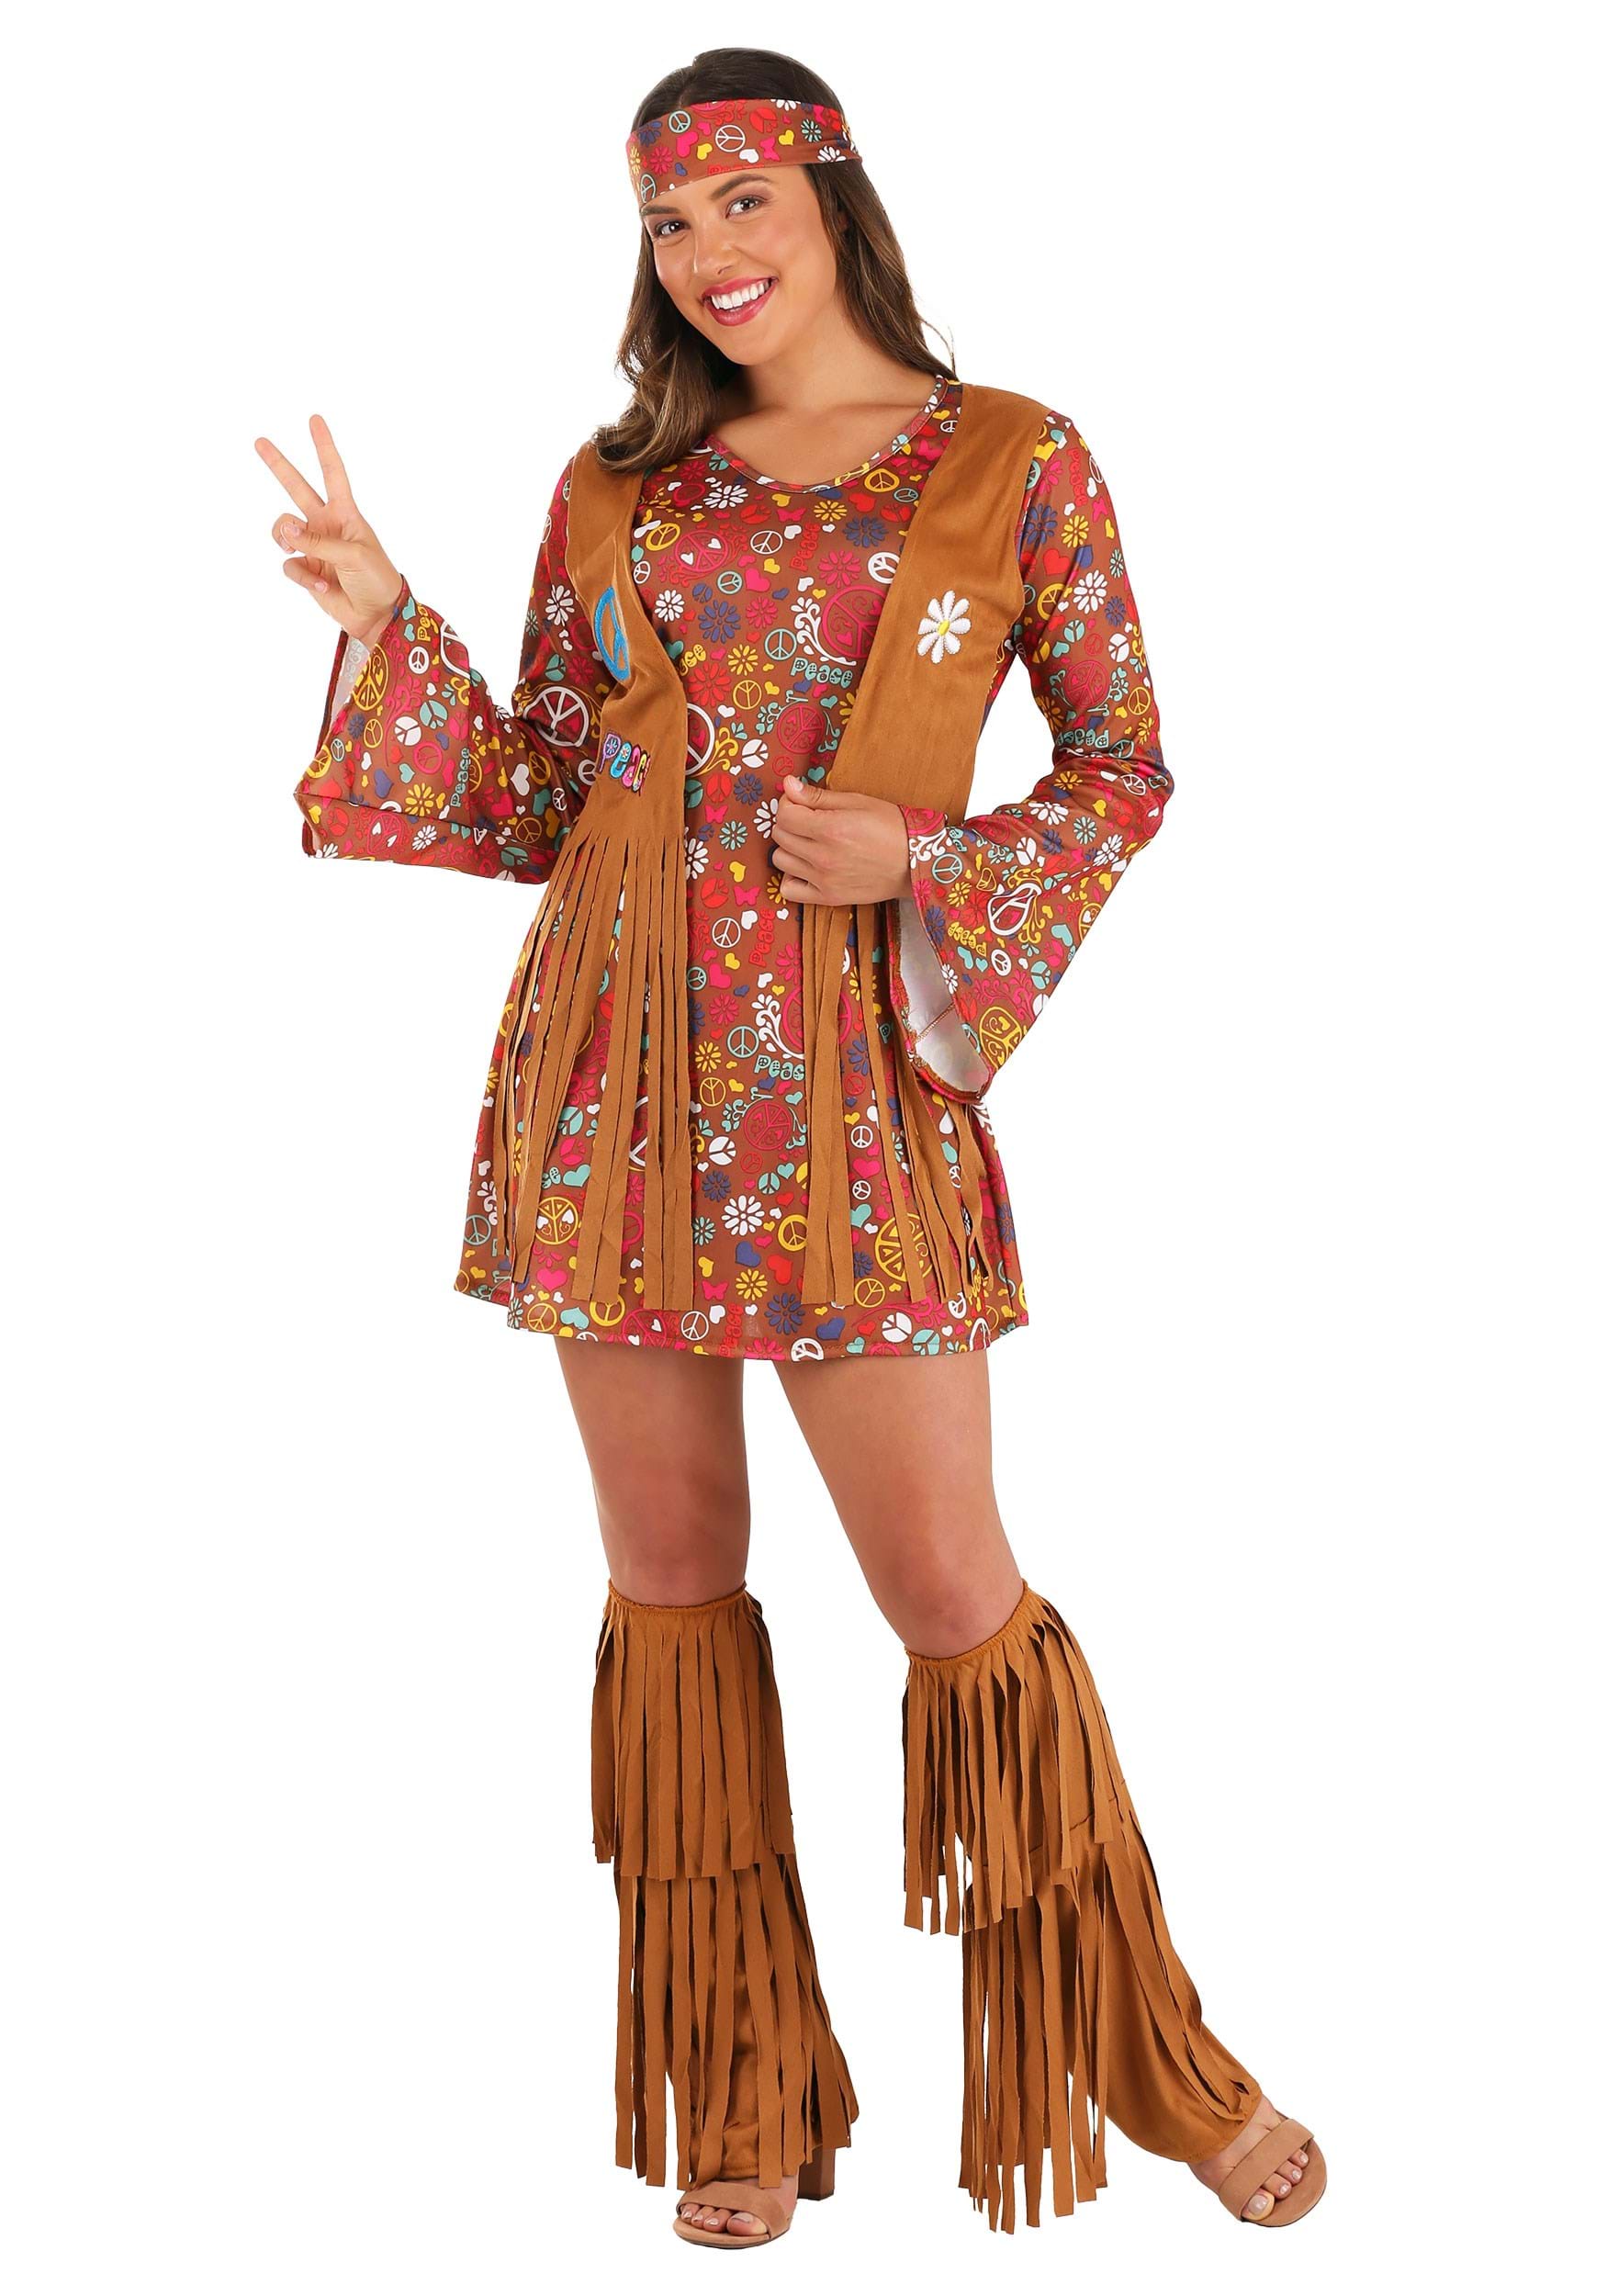 Peace & Love Hippie Women’s Costume